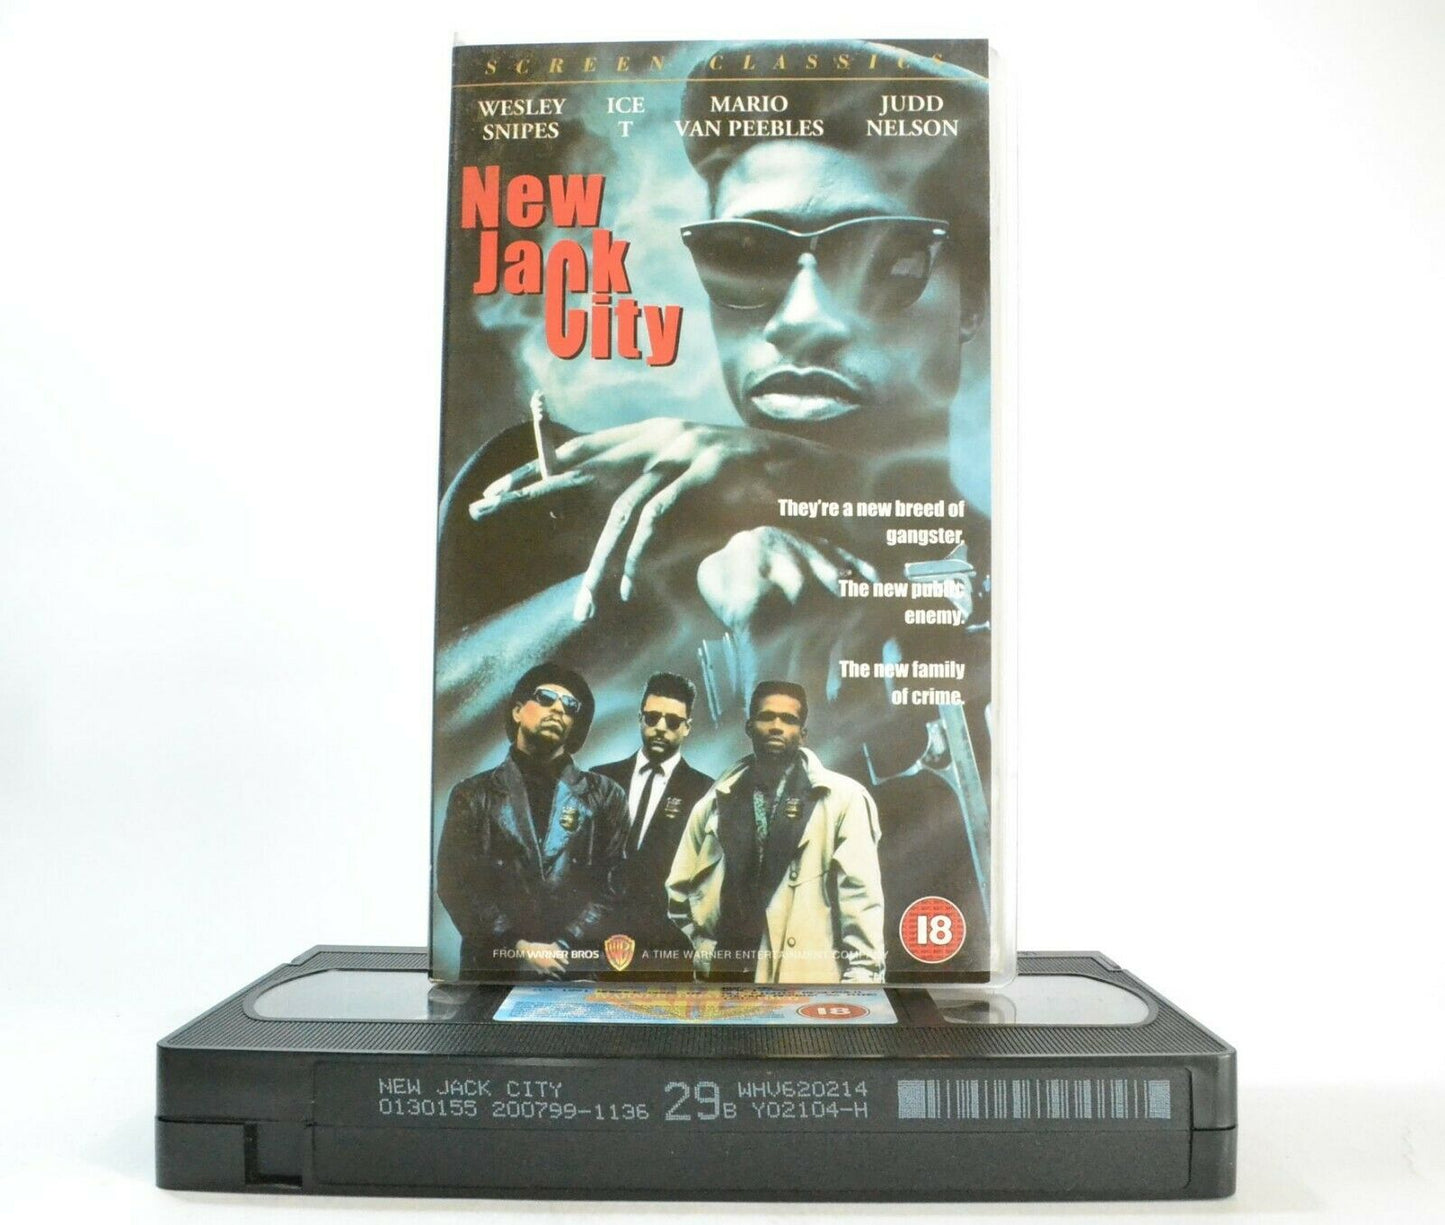 New Jack City: M. Van Peebles Film (1991) - Action/Thriller - W.Snipes - Pal VHS-